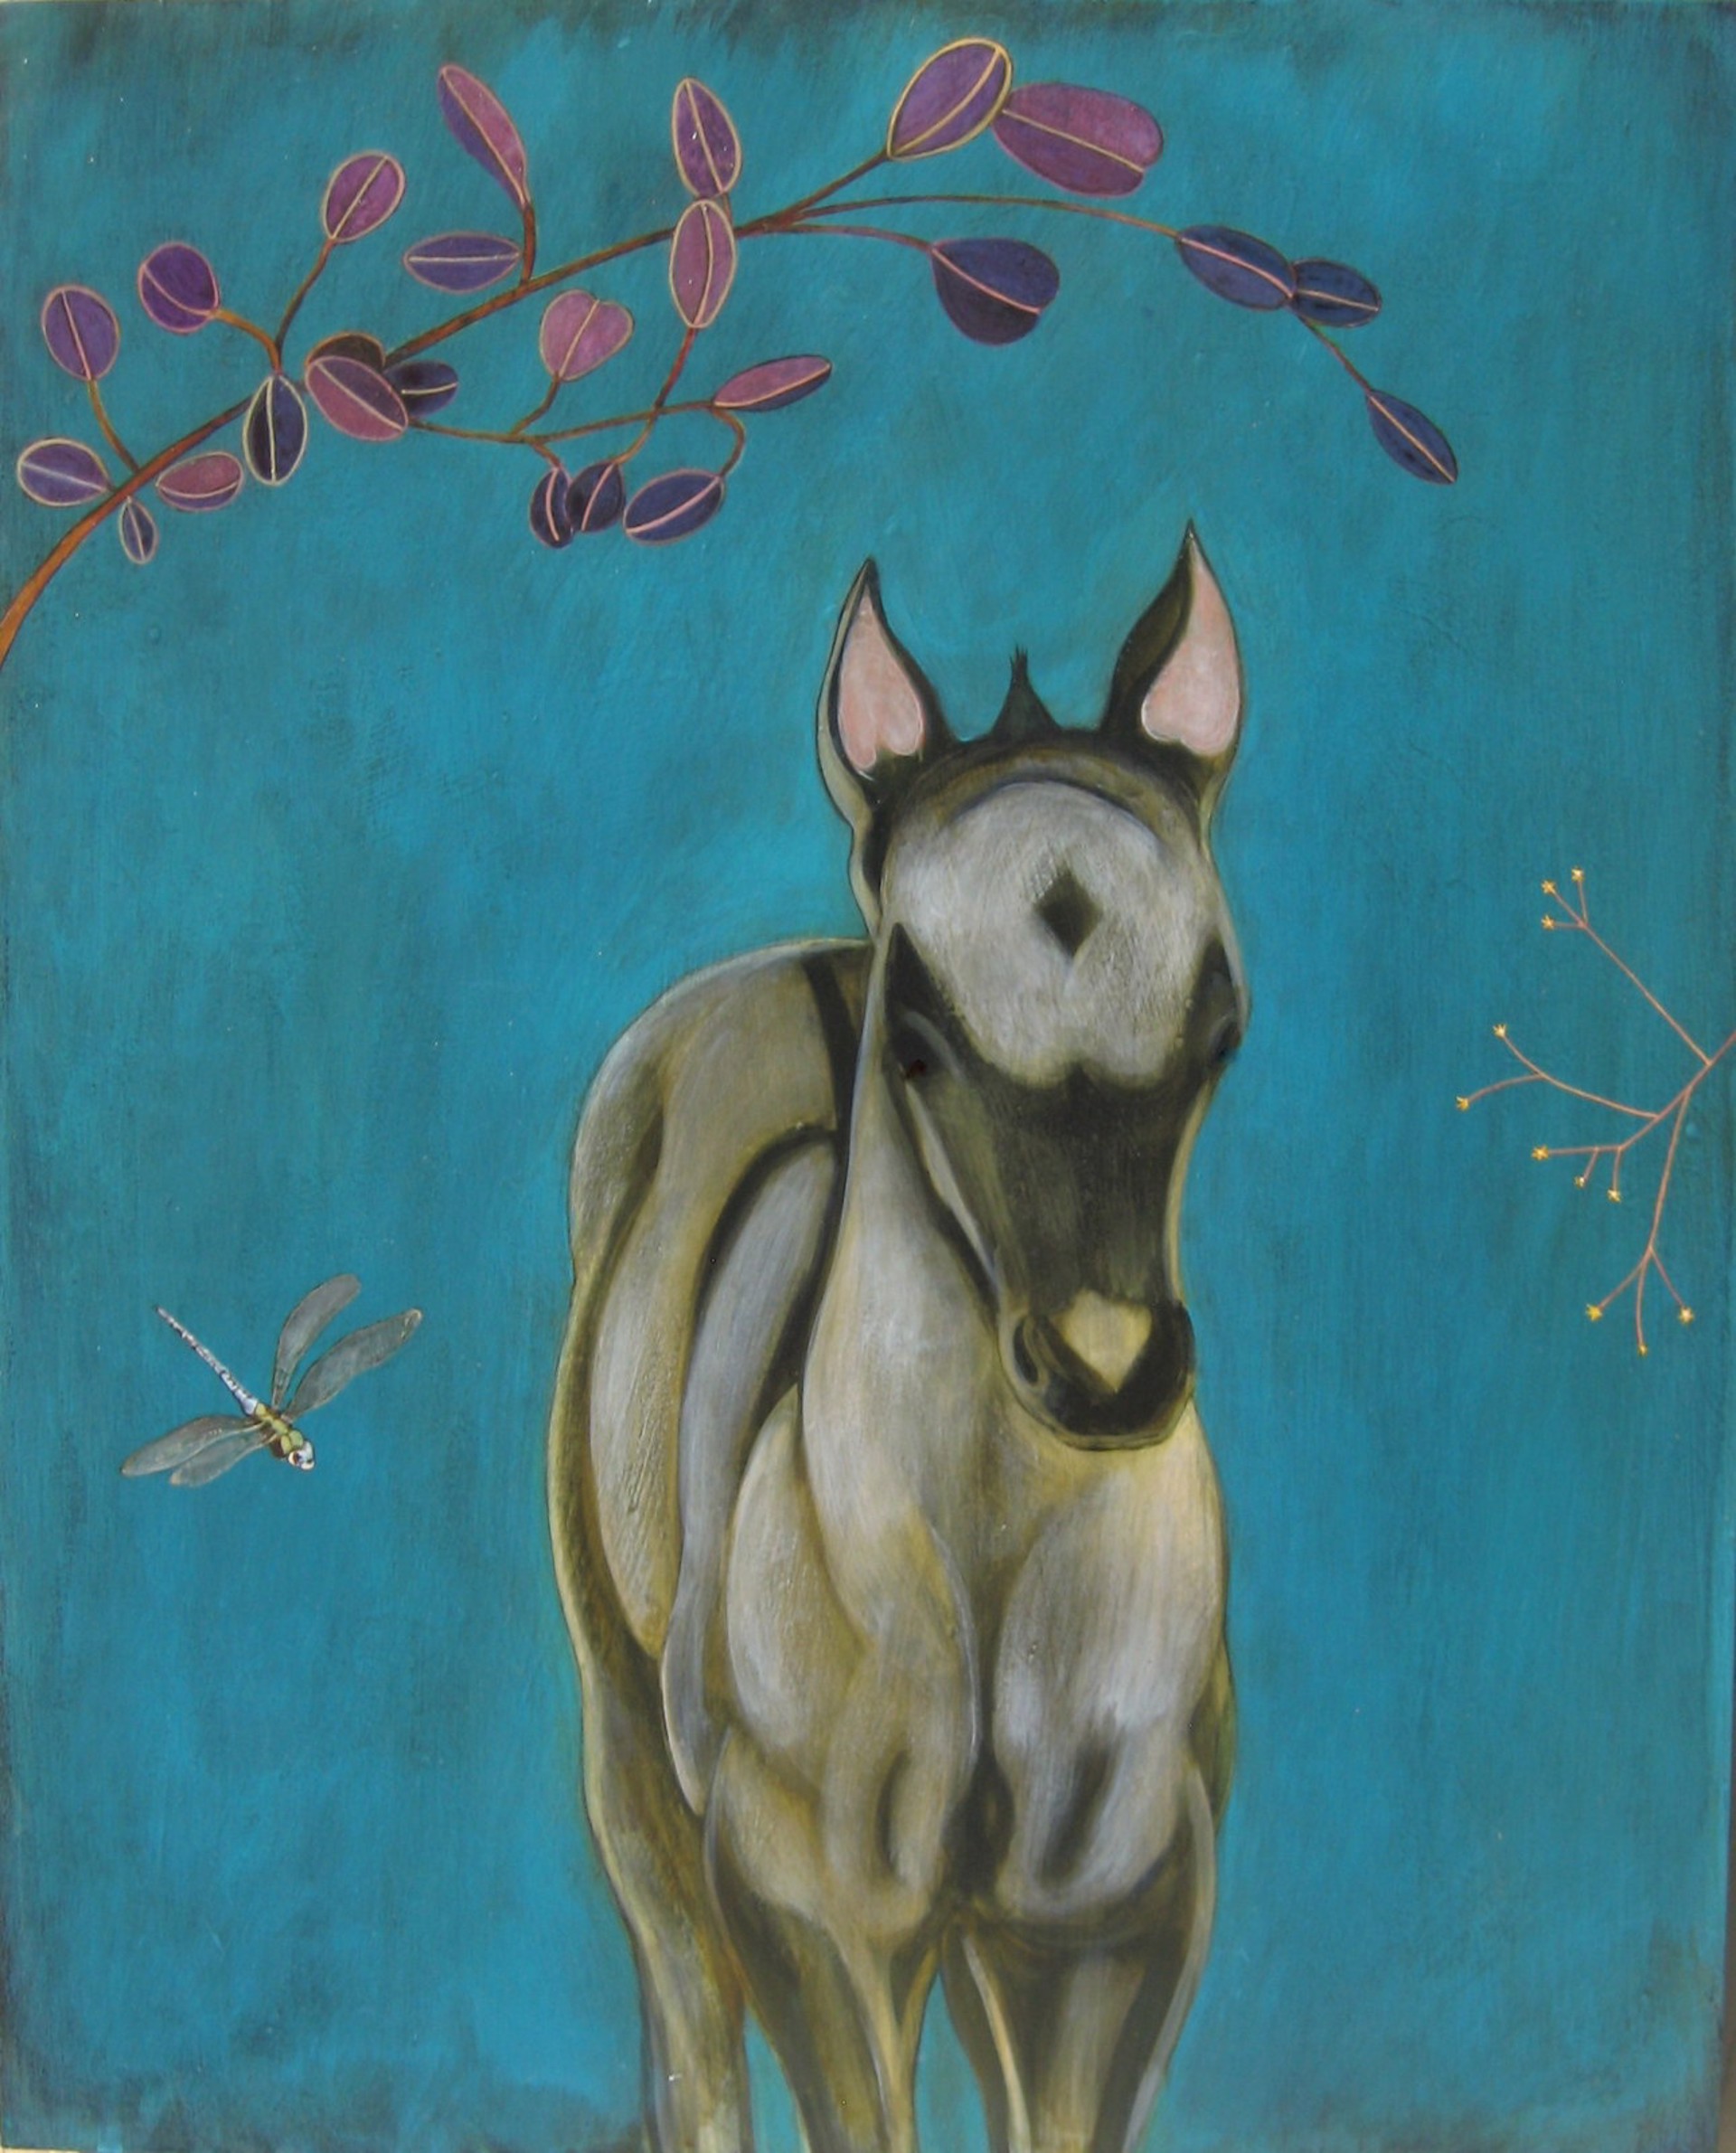 Dun Horse by Phyllis Stapler